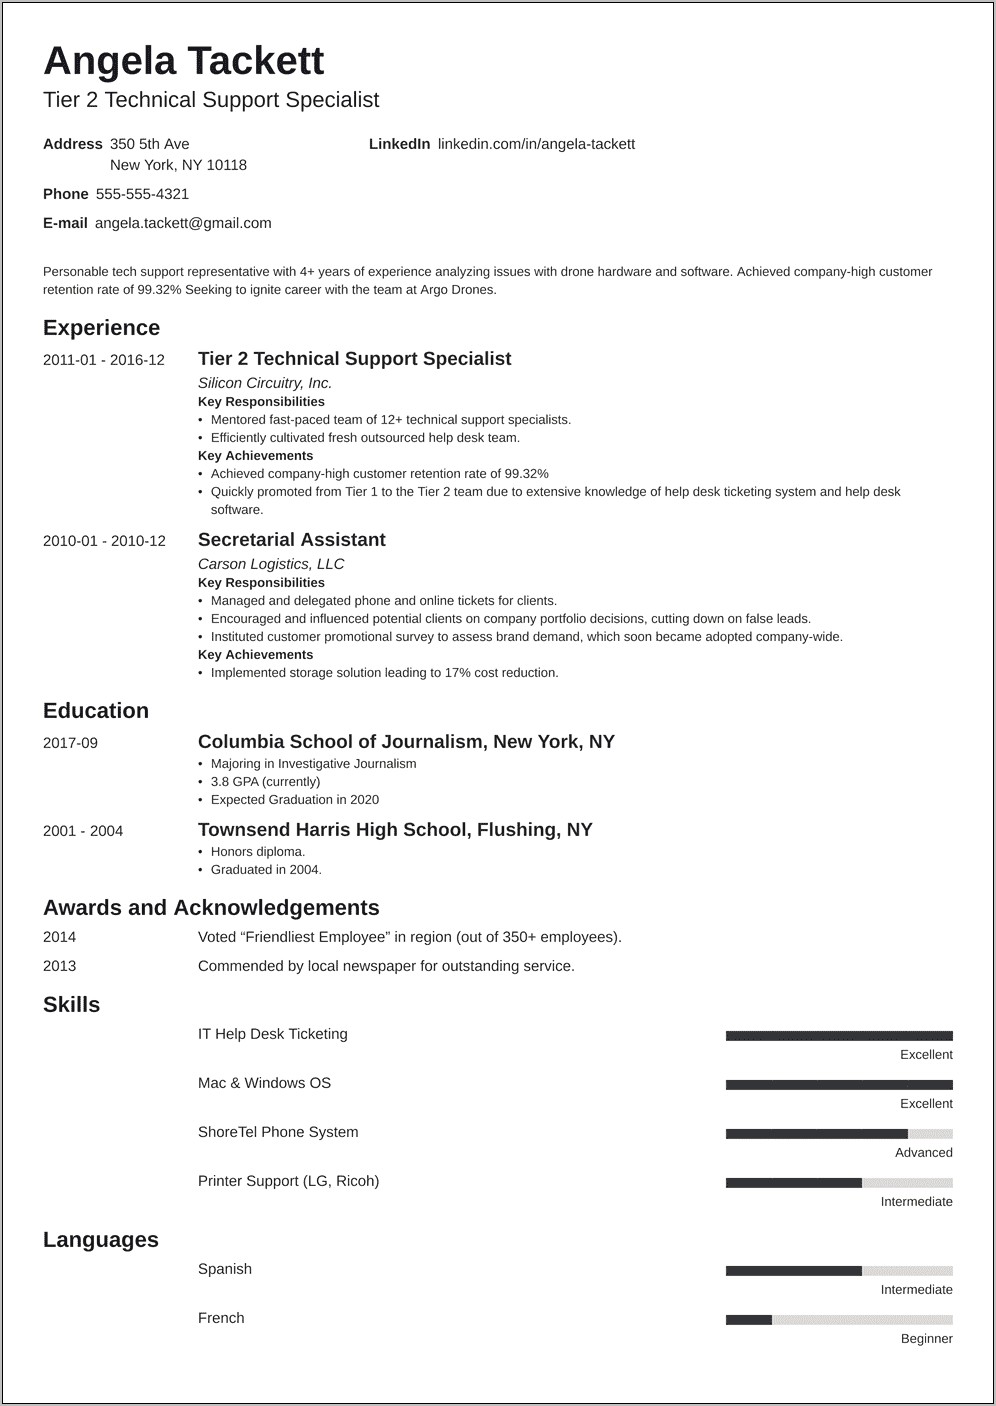 Resume Objective For Help Desk Technician